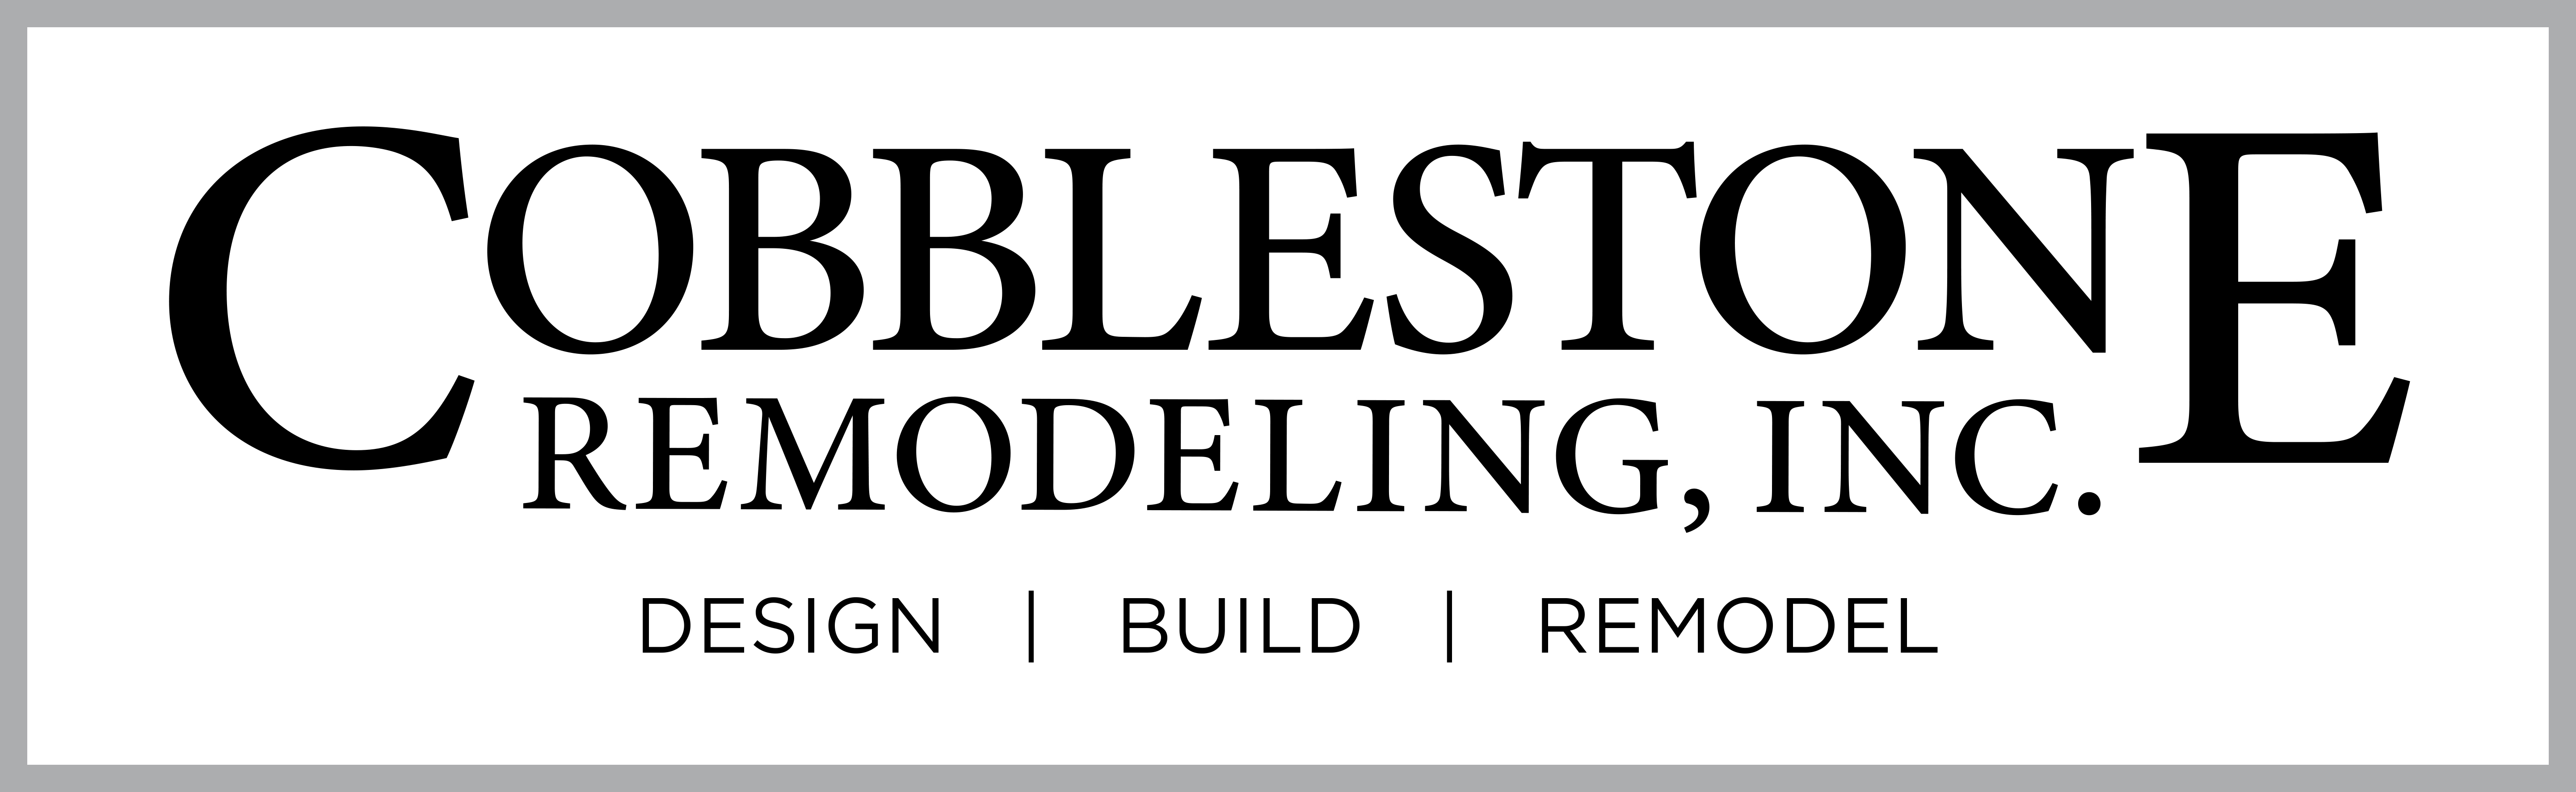 Cobblestone Remodeling, Inc Logo